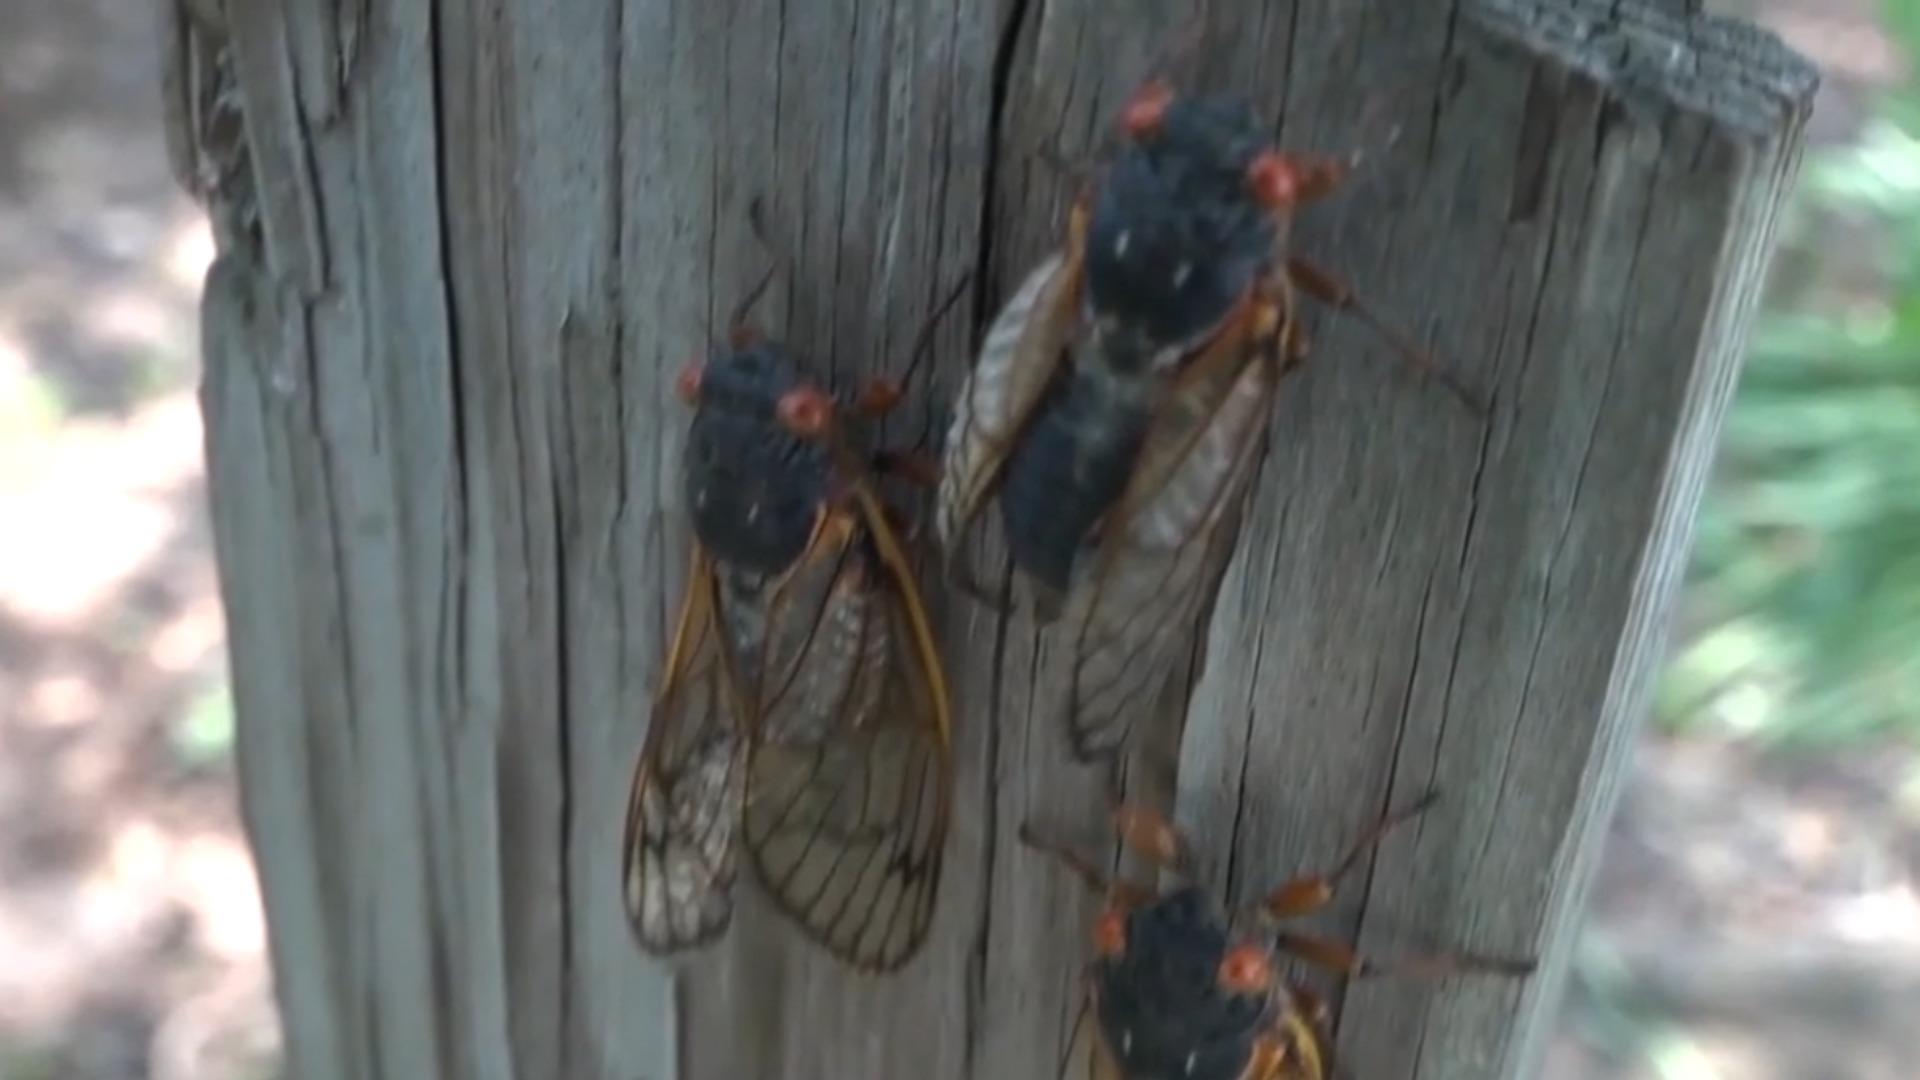 cbsn-fusion-it-has-begun-trillions-of-cicadas-emerge-across-us-thumbnail.jpg 